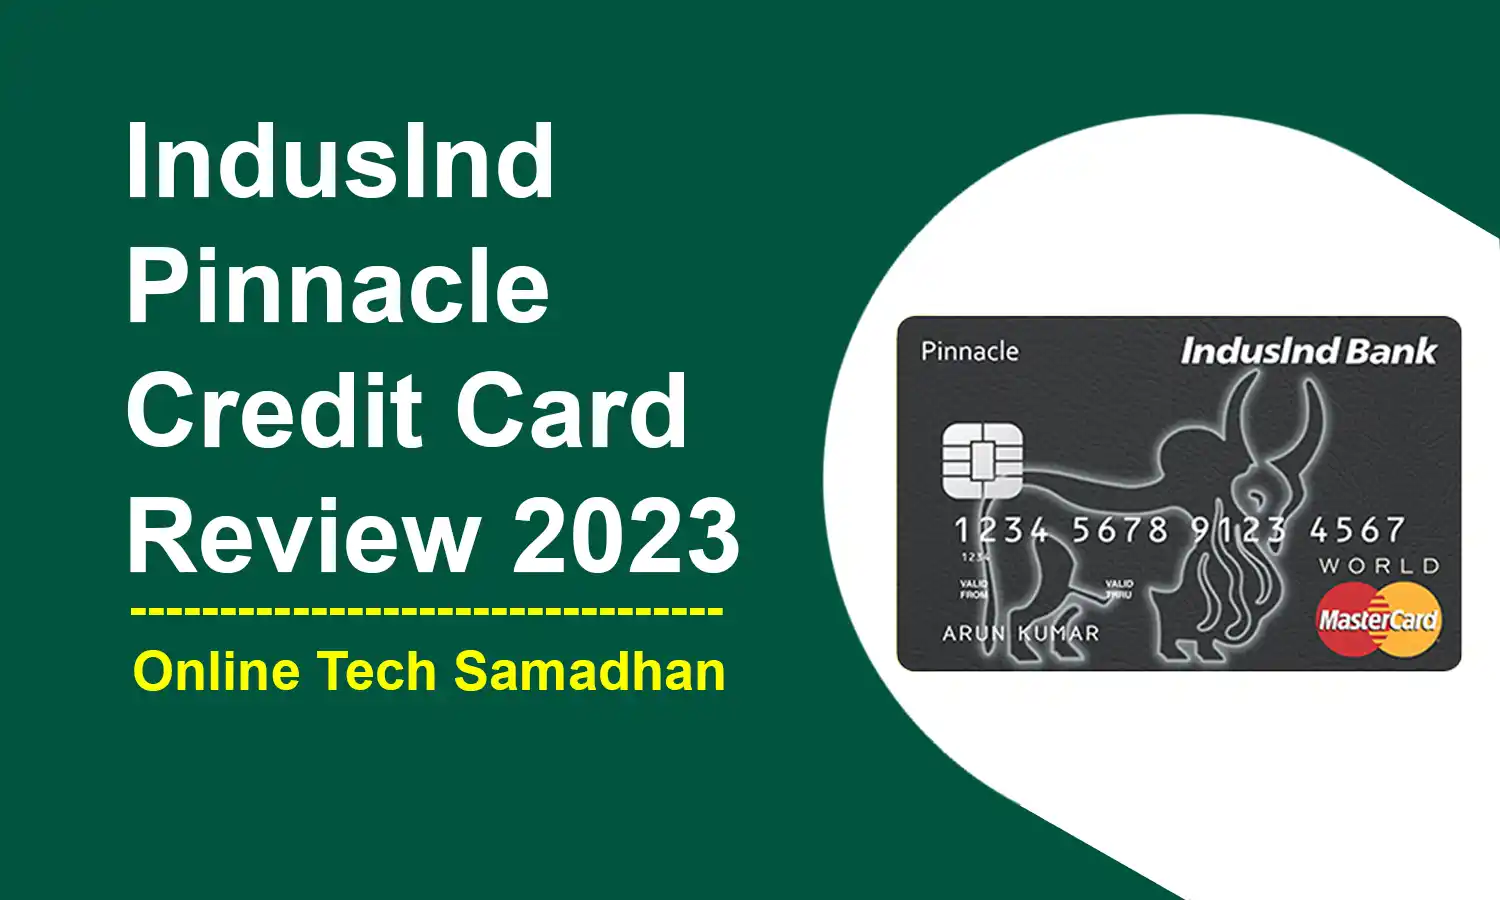 IndusInd Pinnacle Credit Card Review